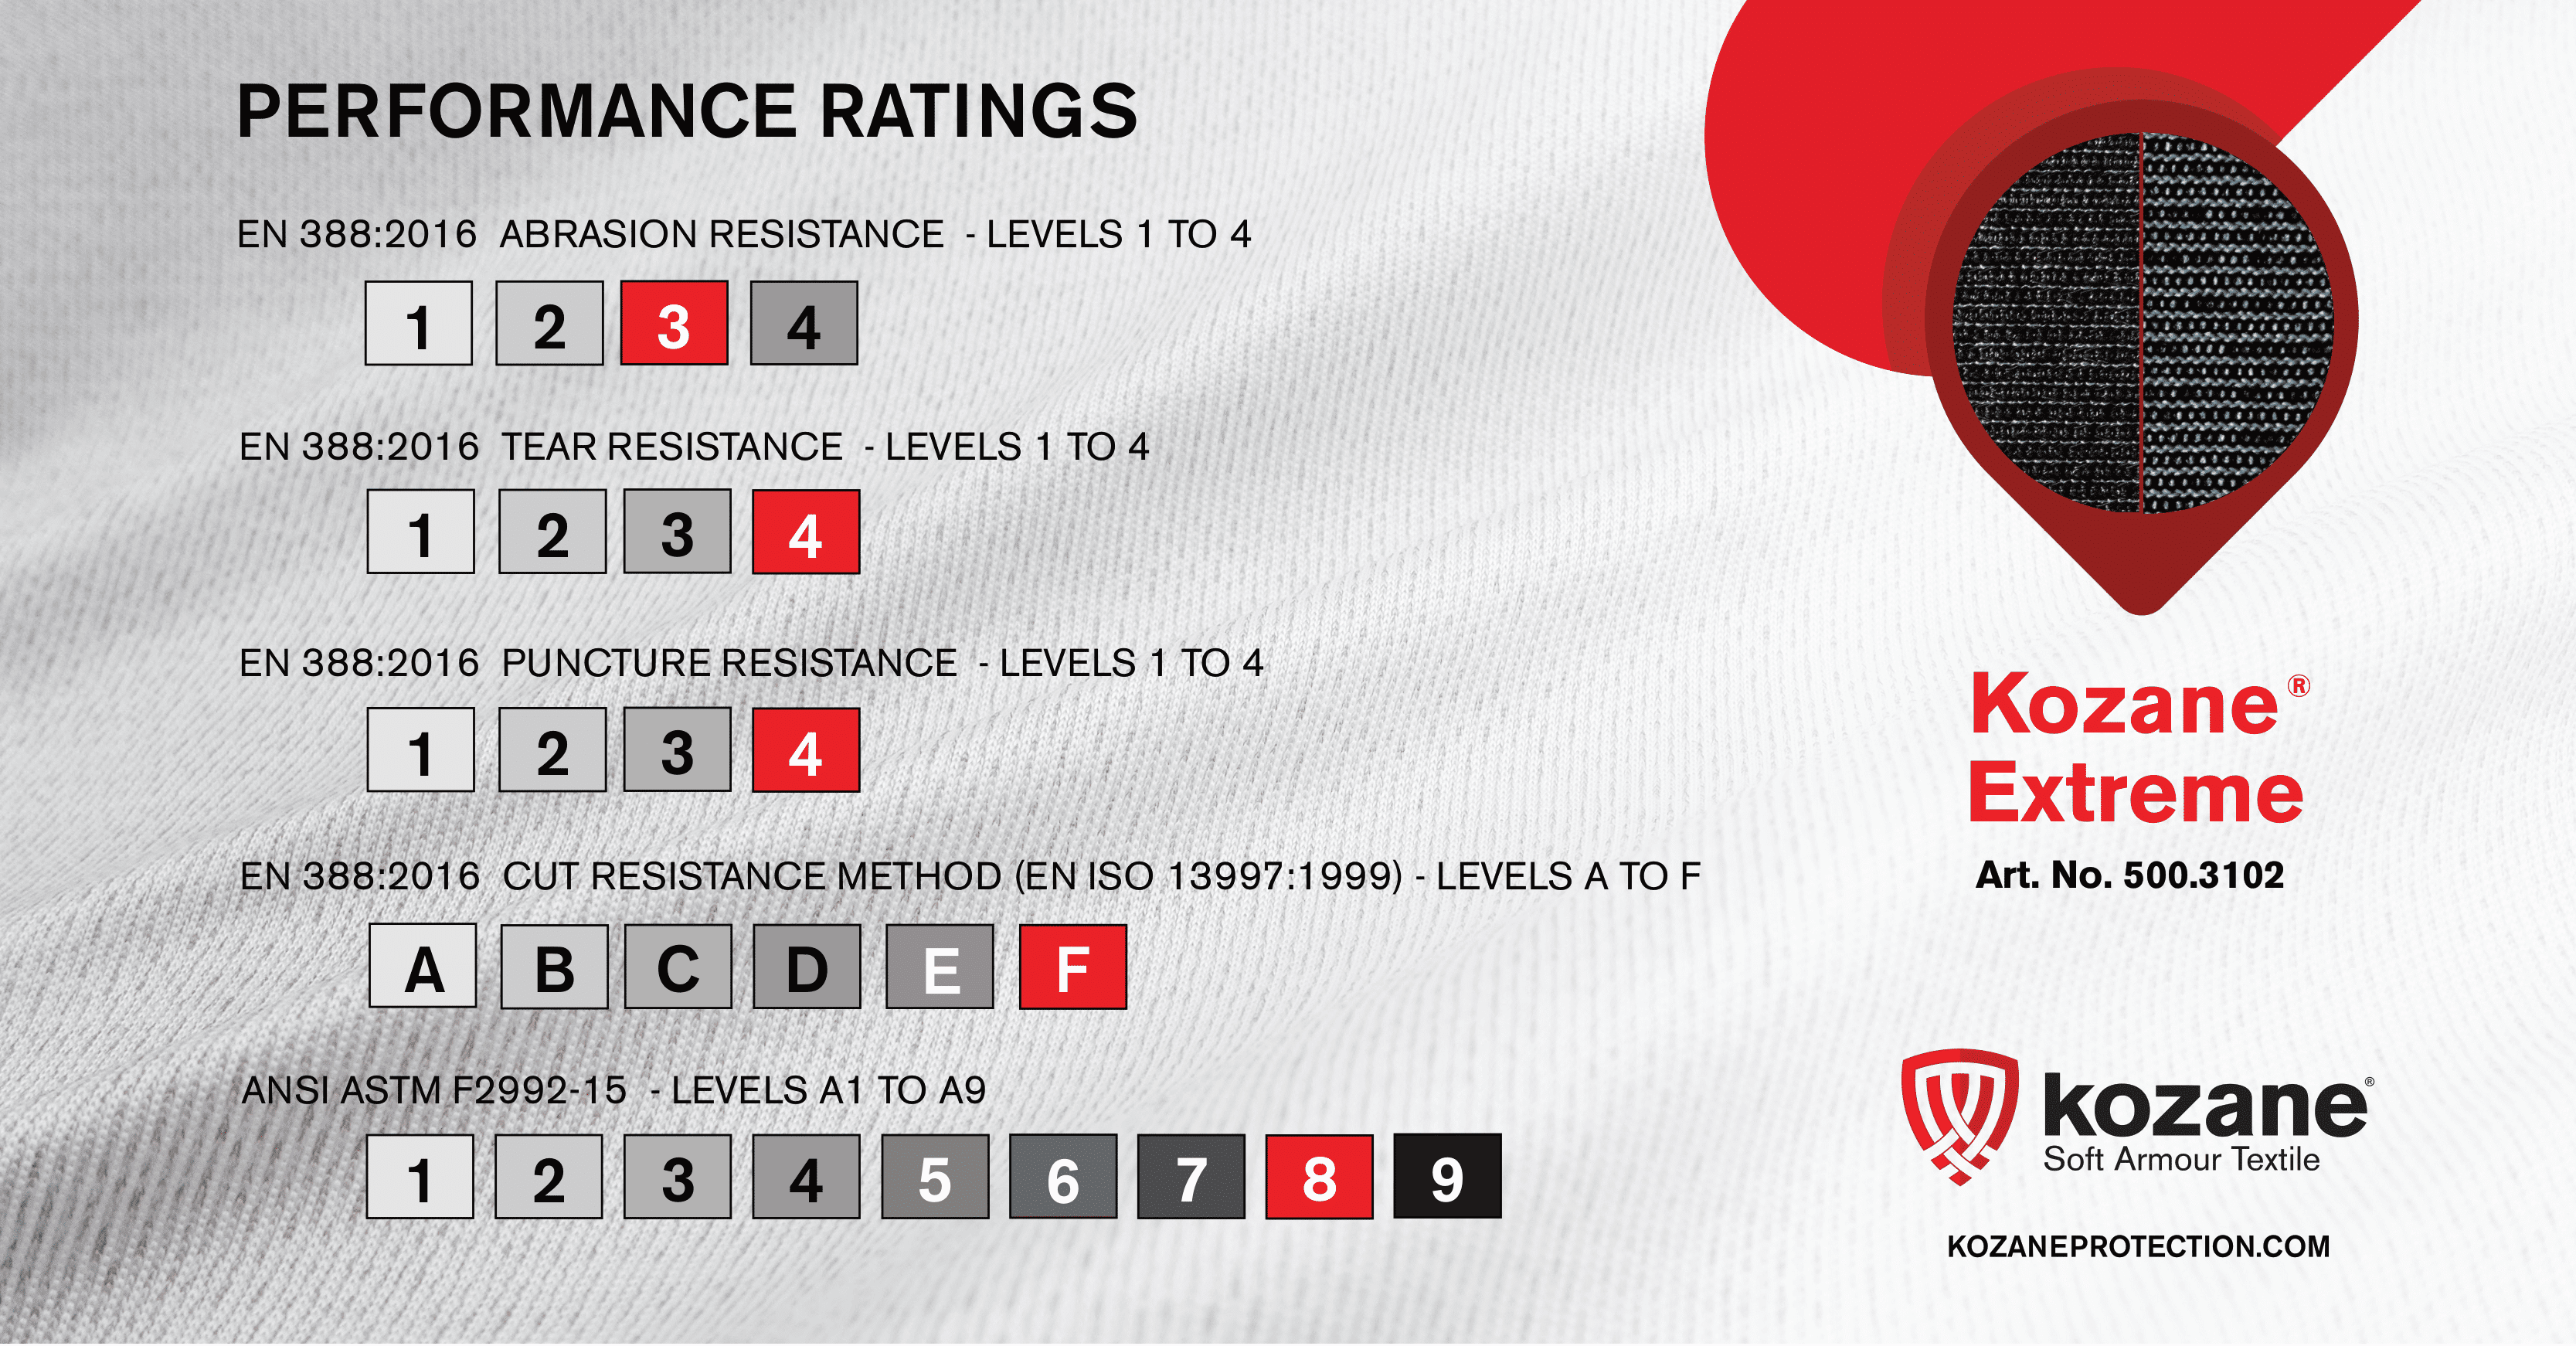 Kozane Extreme Performance Rating